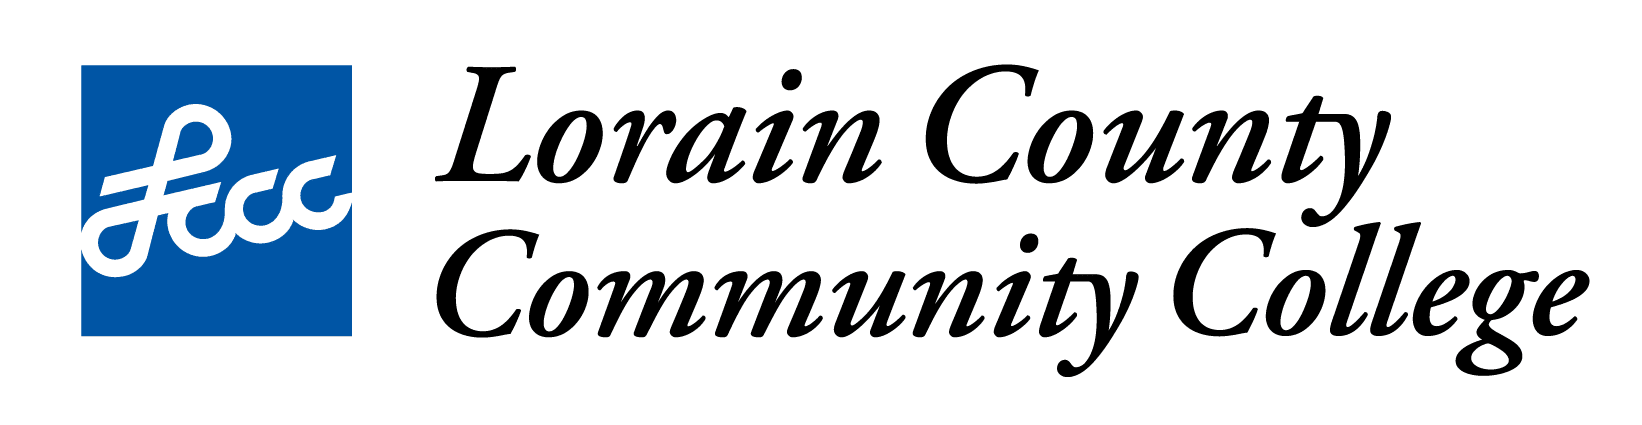 LCCC-logo-2C